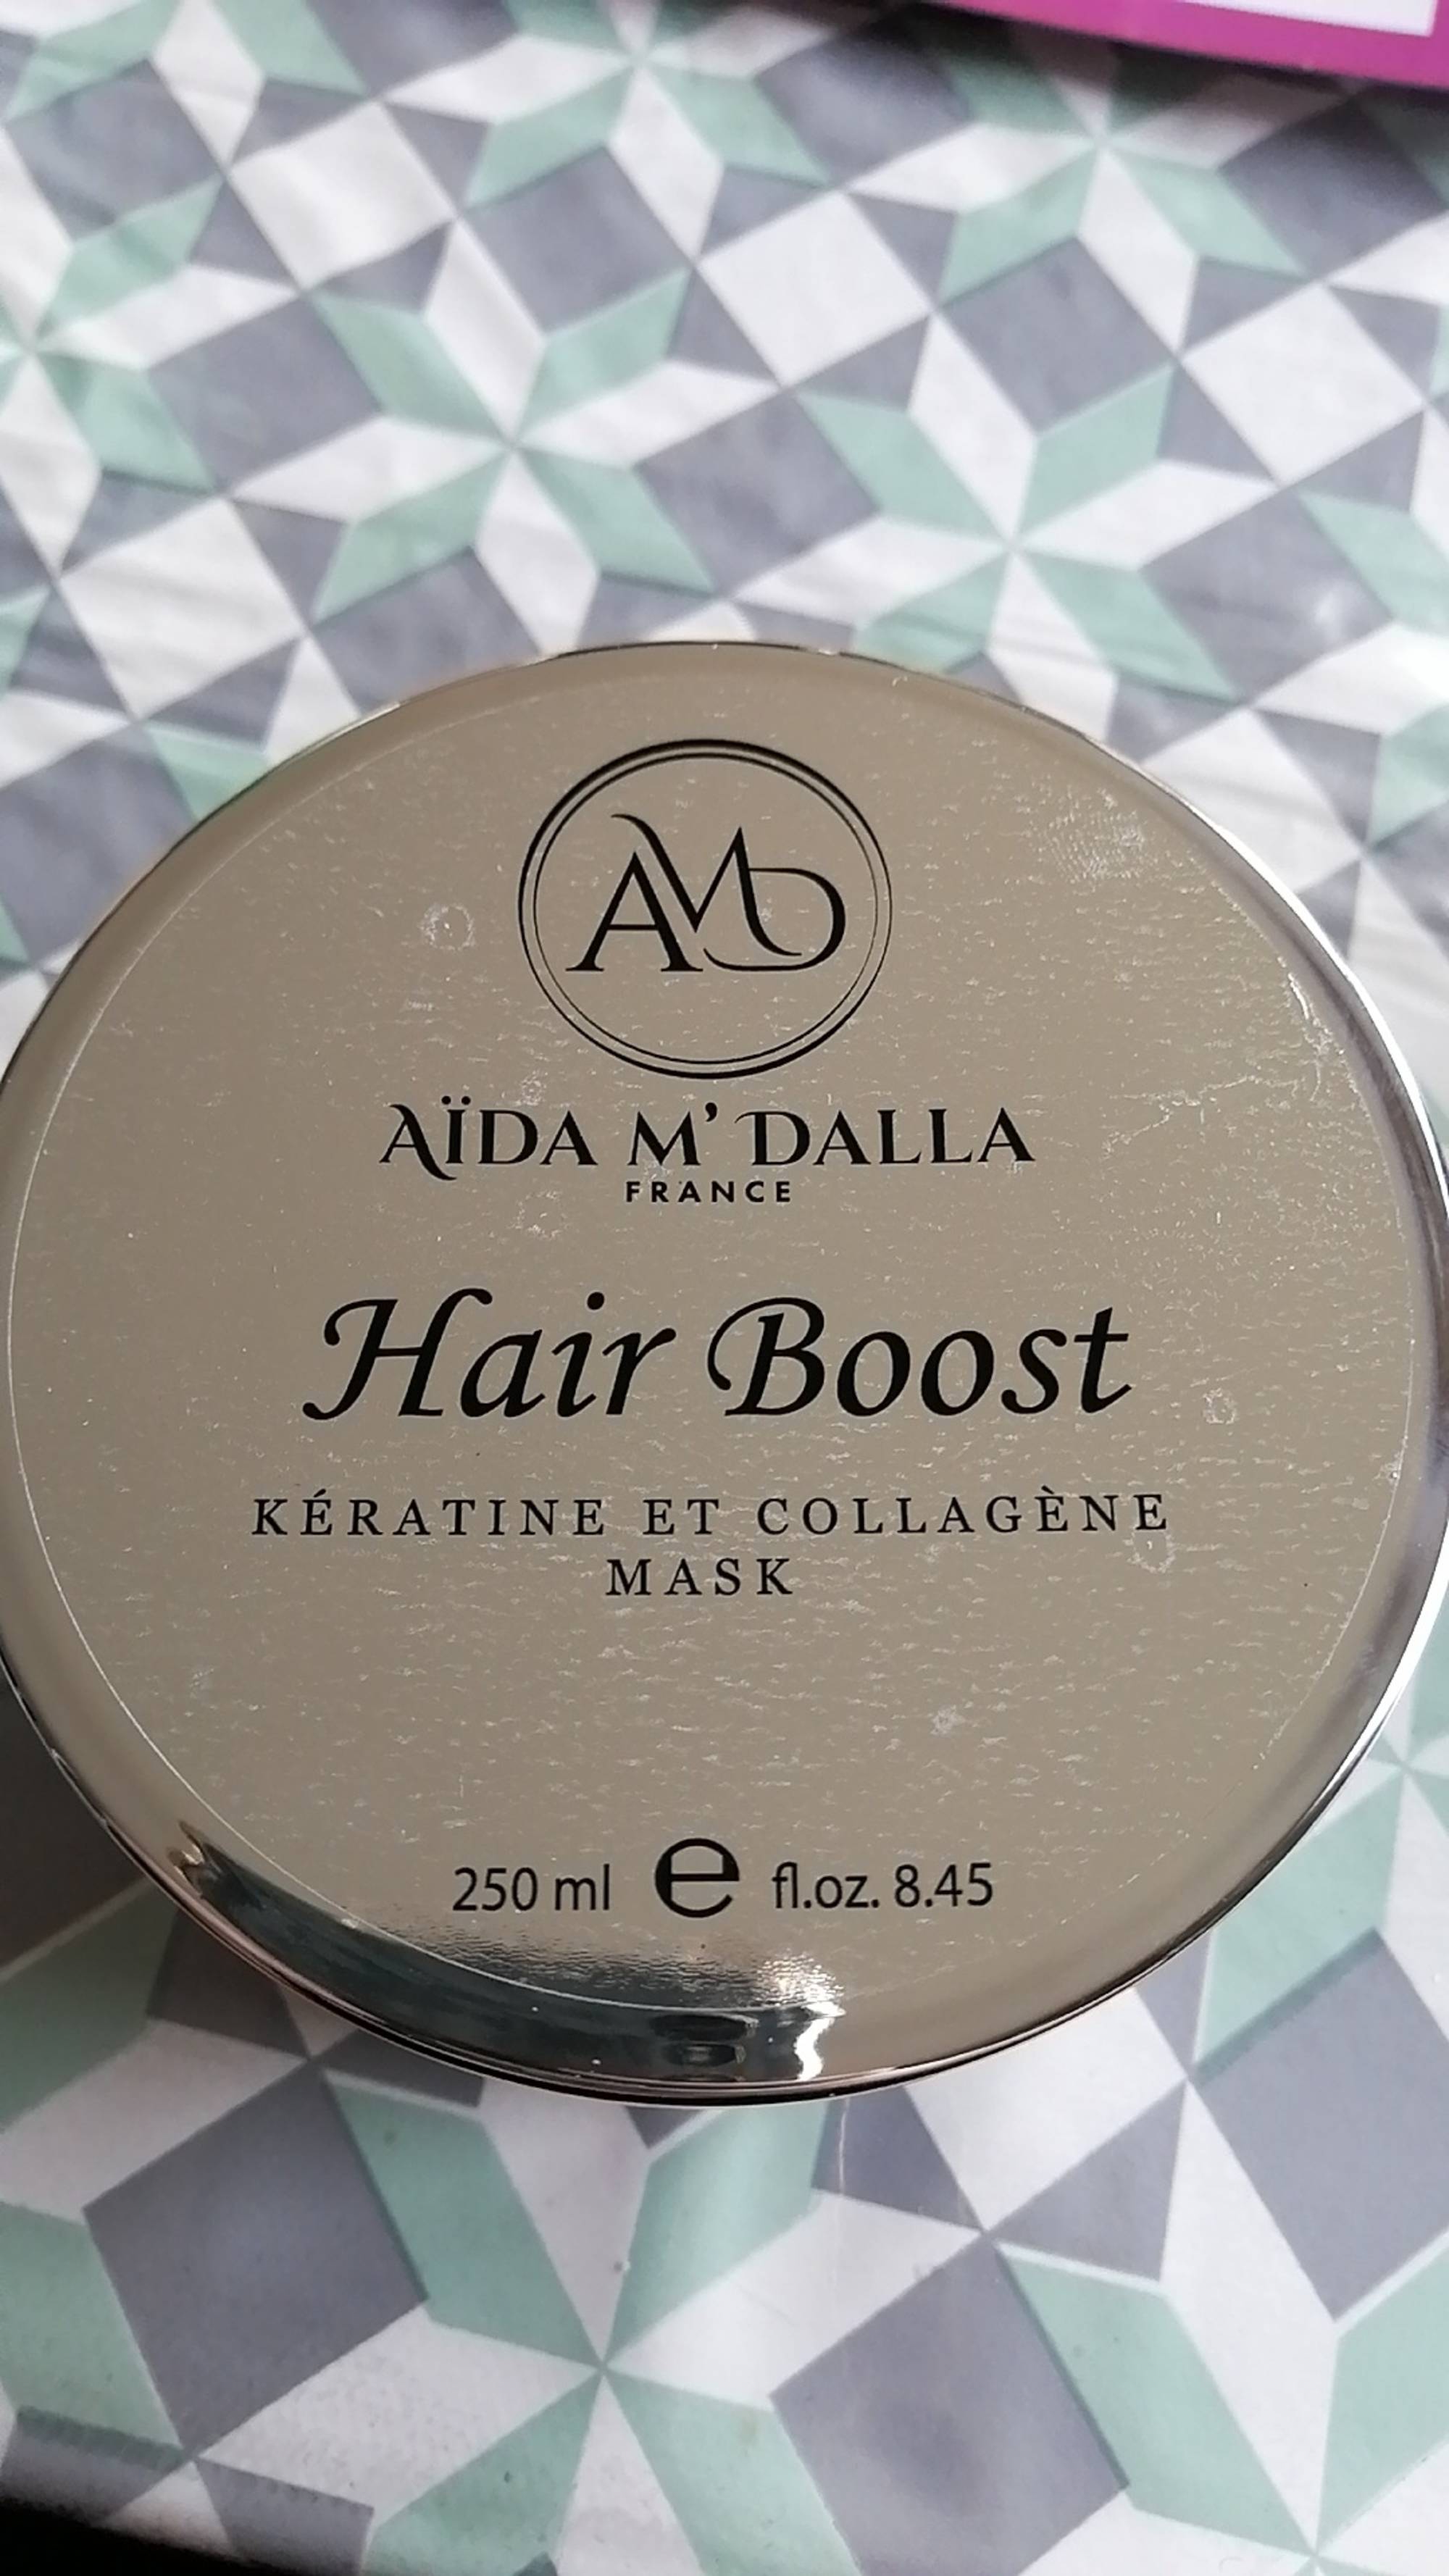 AIDA M'DALLA - Hair boost - Kératine et collagène mask